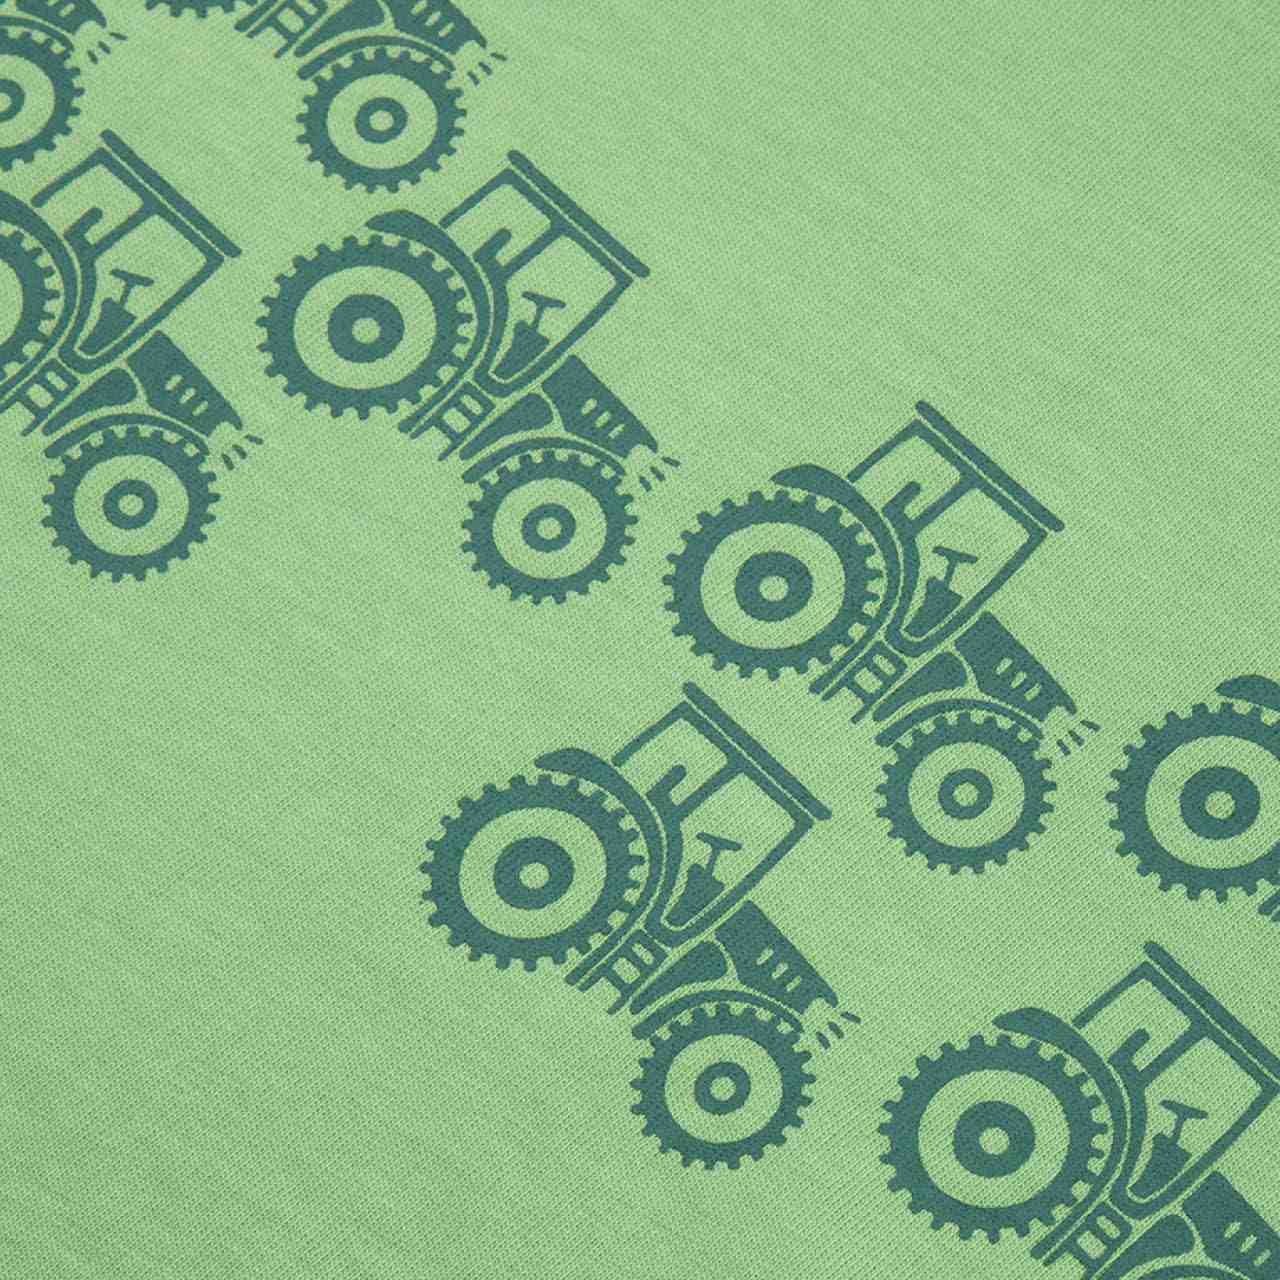 Langarmshirt Traktor grün